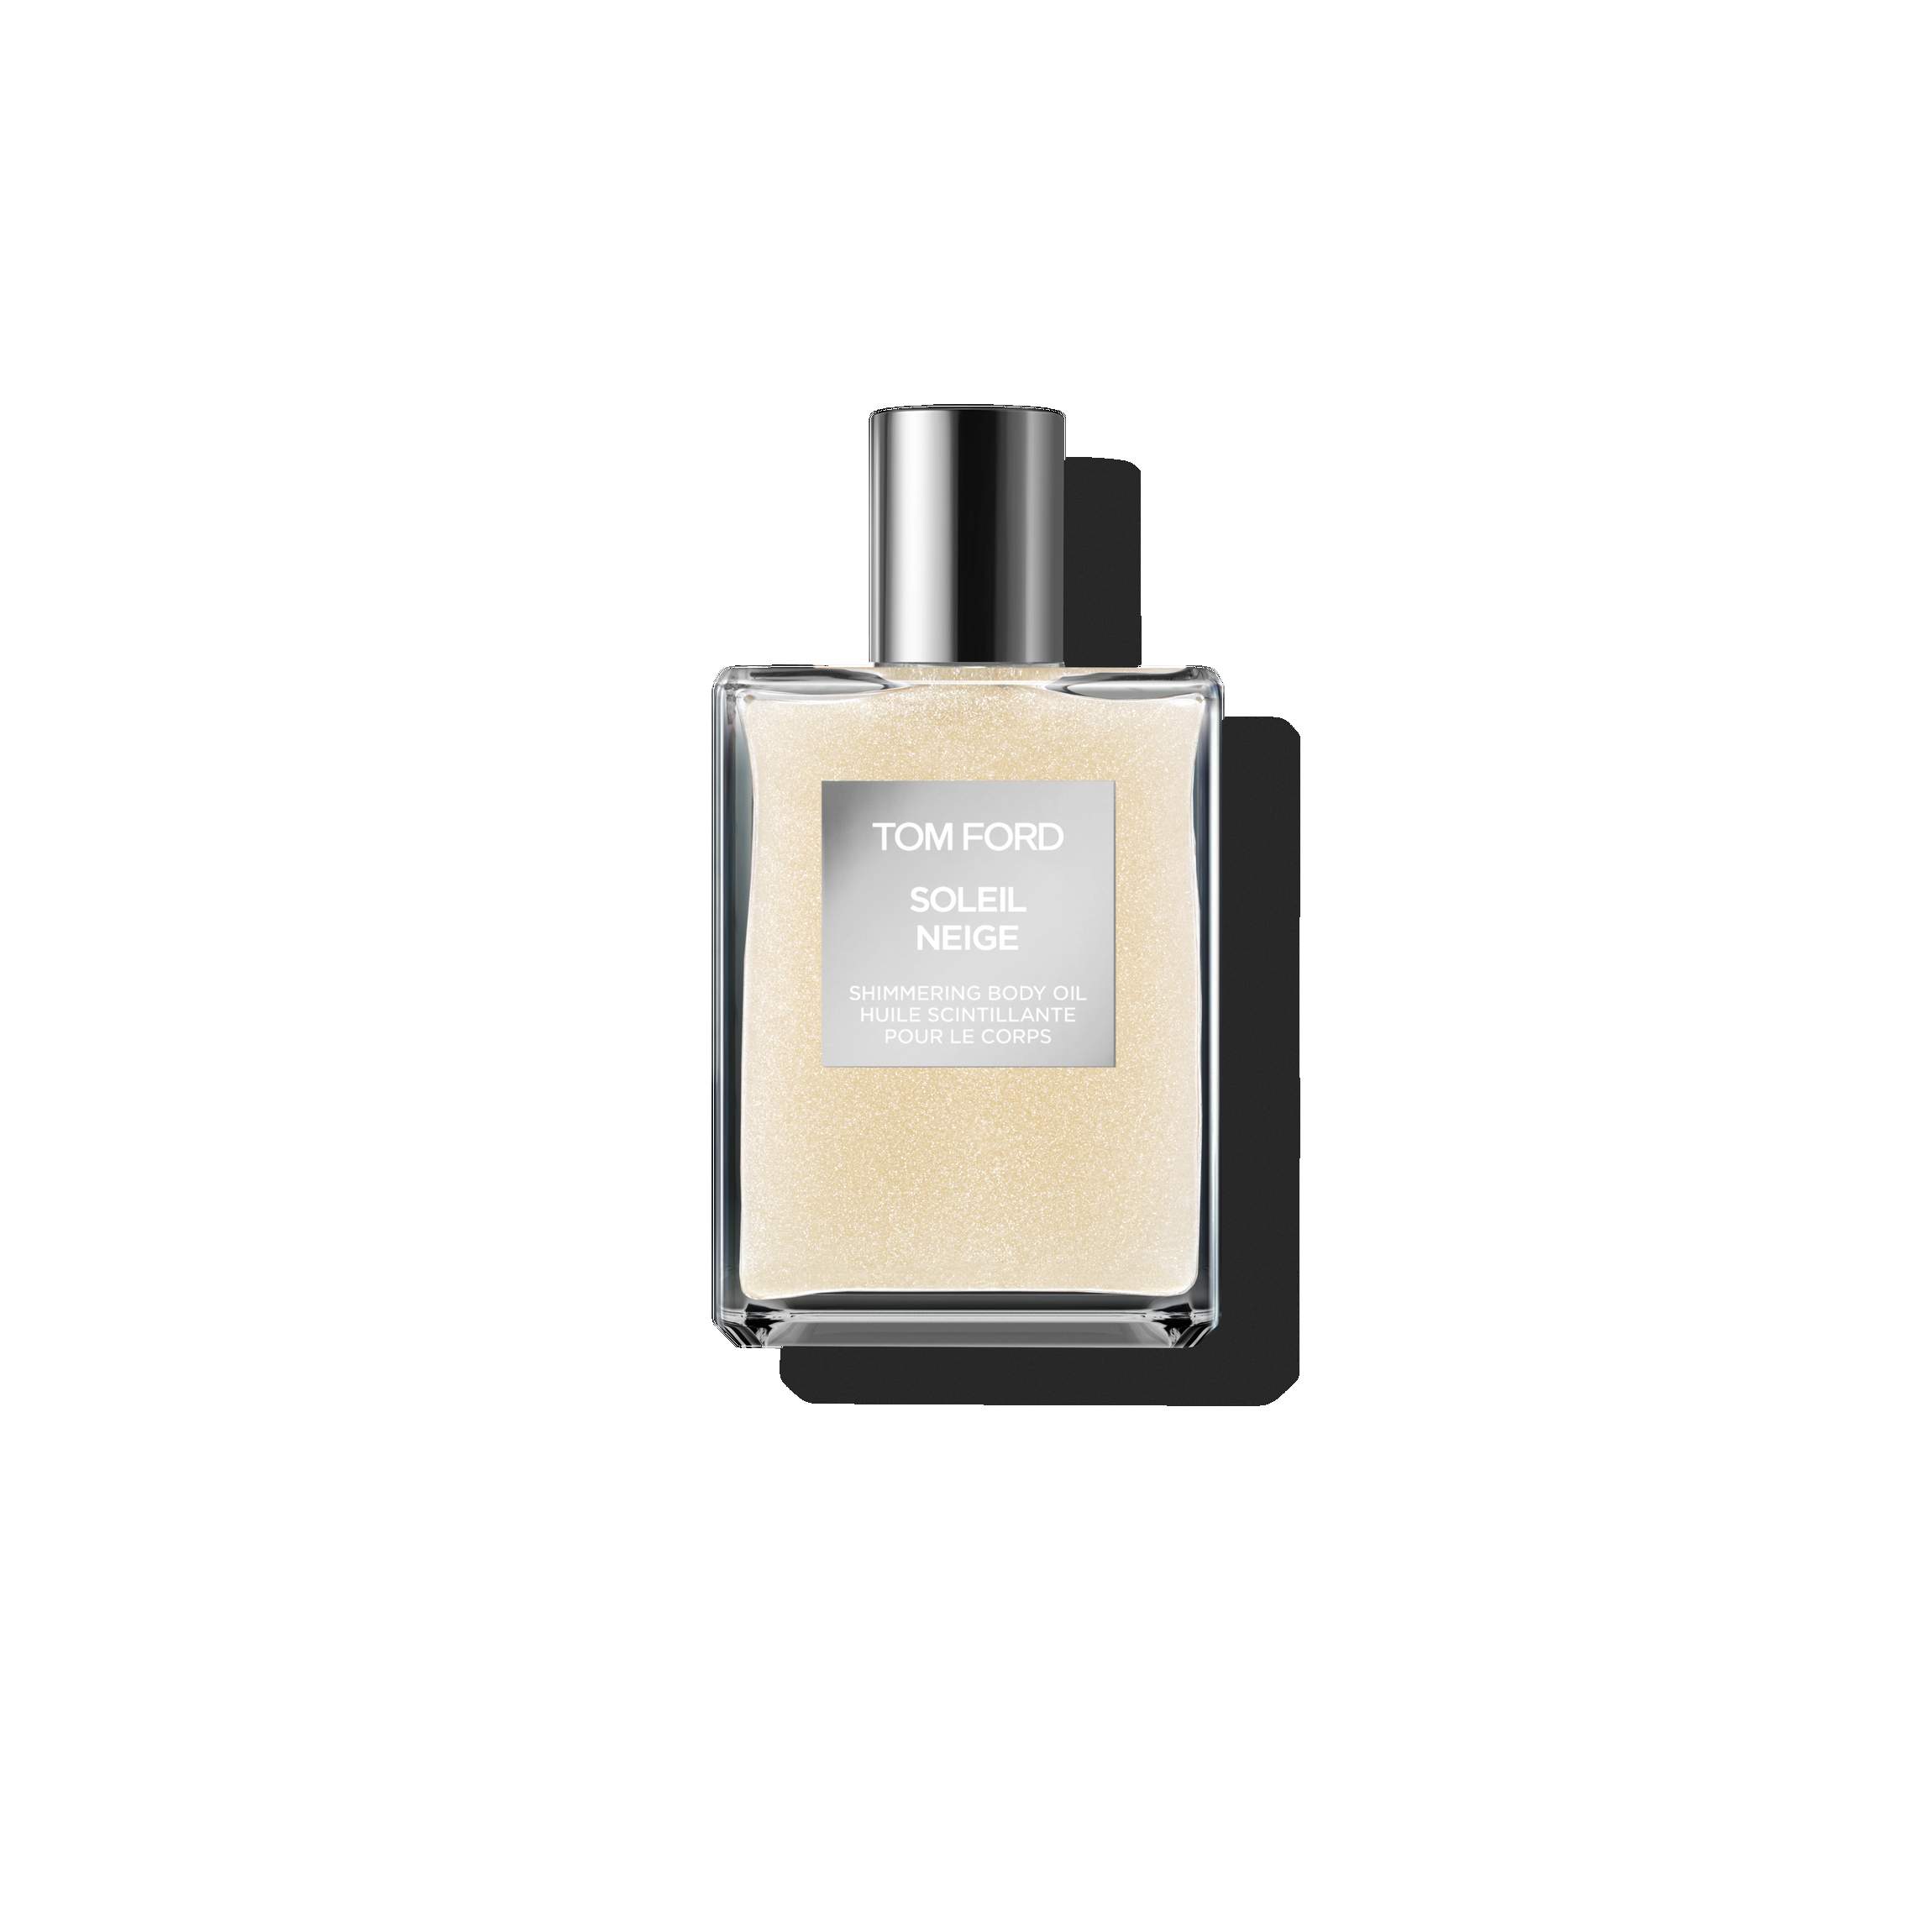 SOLEIL NEIGE SHIMMERING BODY OIL – Opulent Fragrances